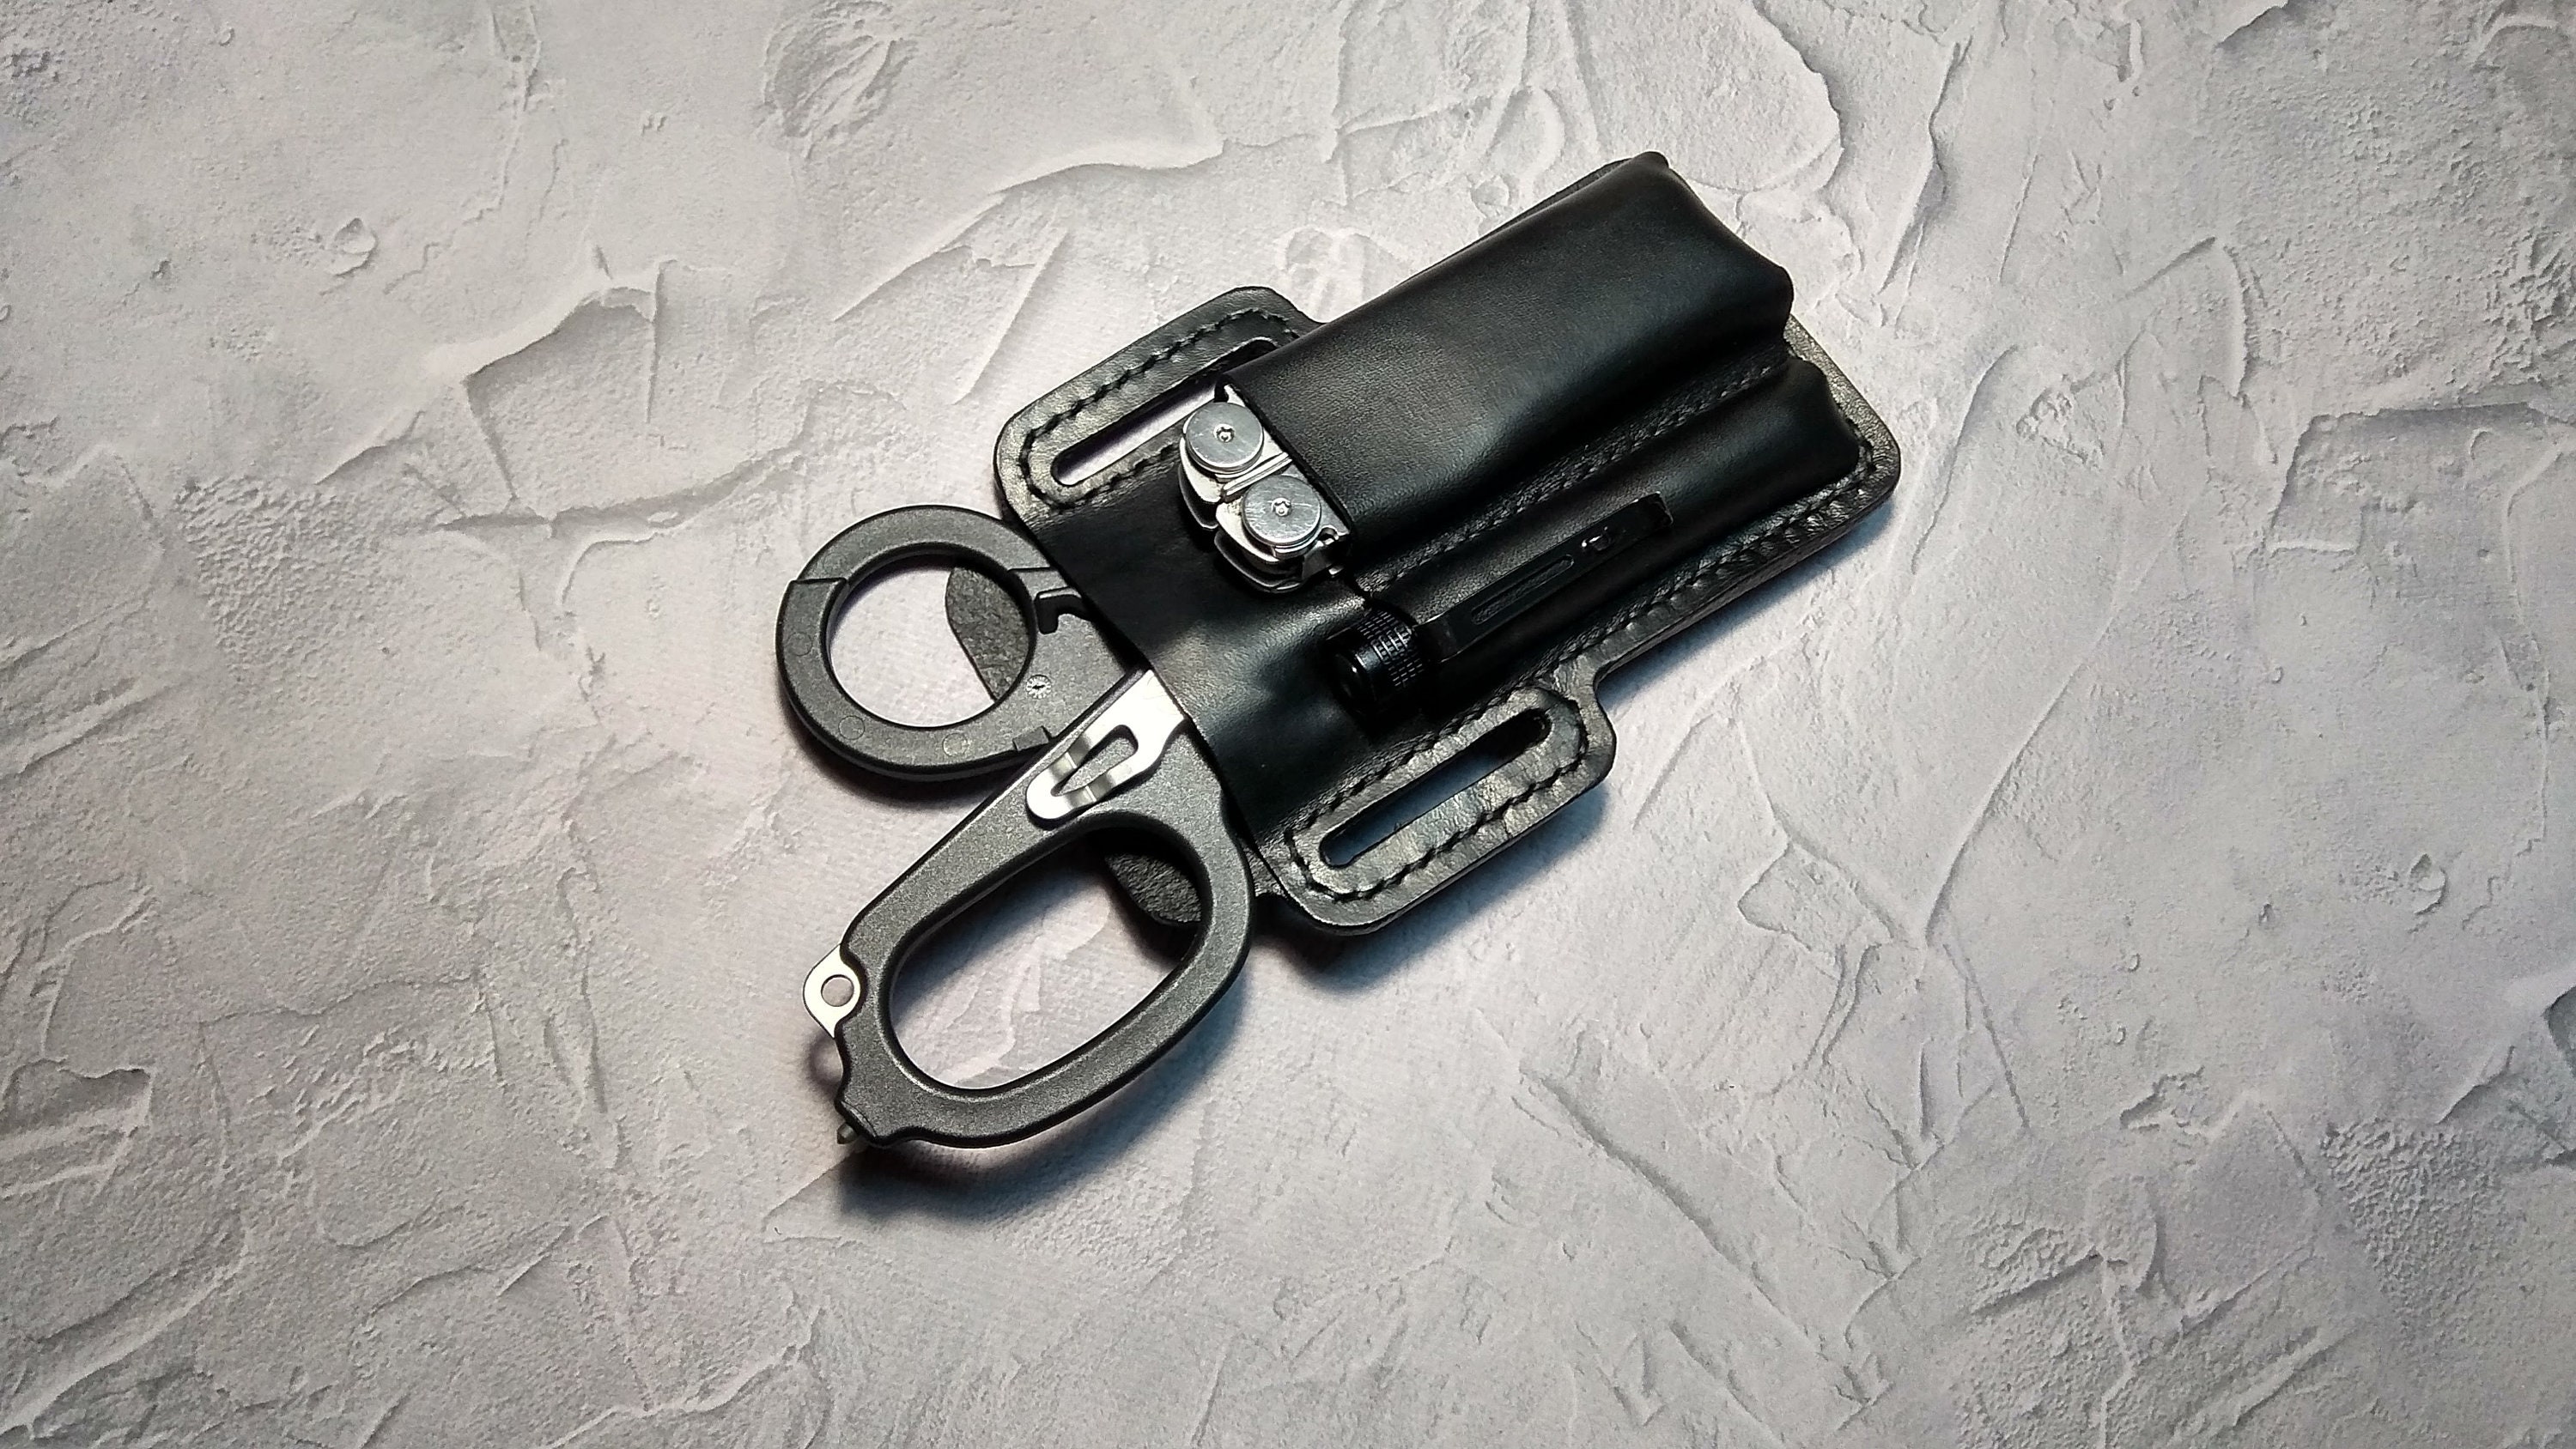 Multi Tool Key Chain Keychain Pendant Practical EDC Mini Scissors